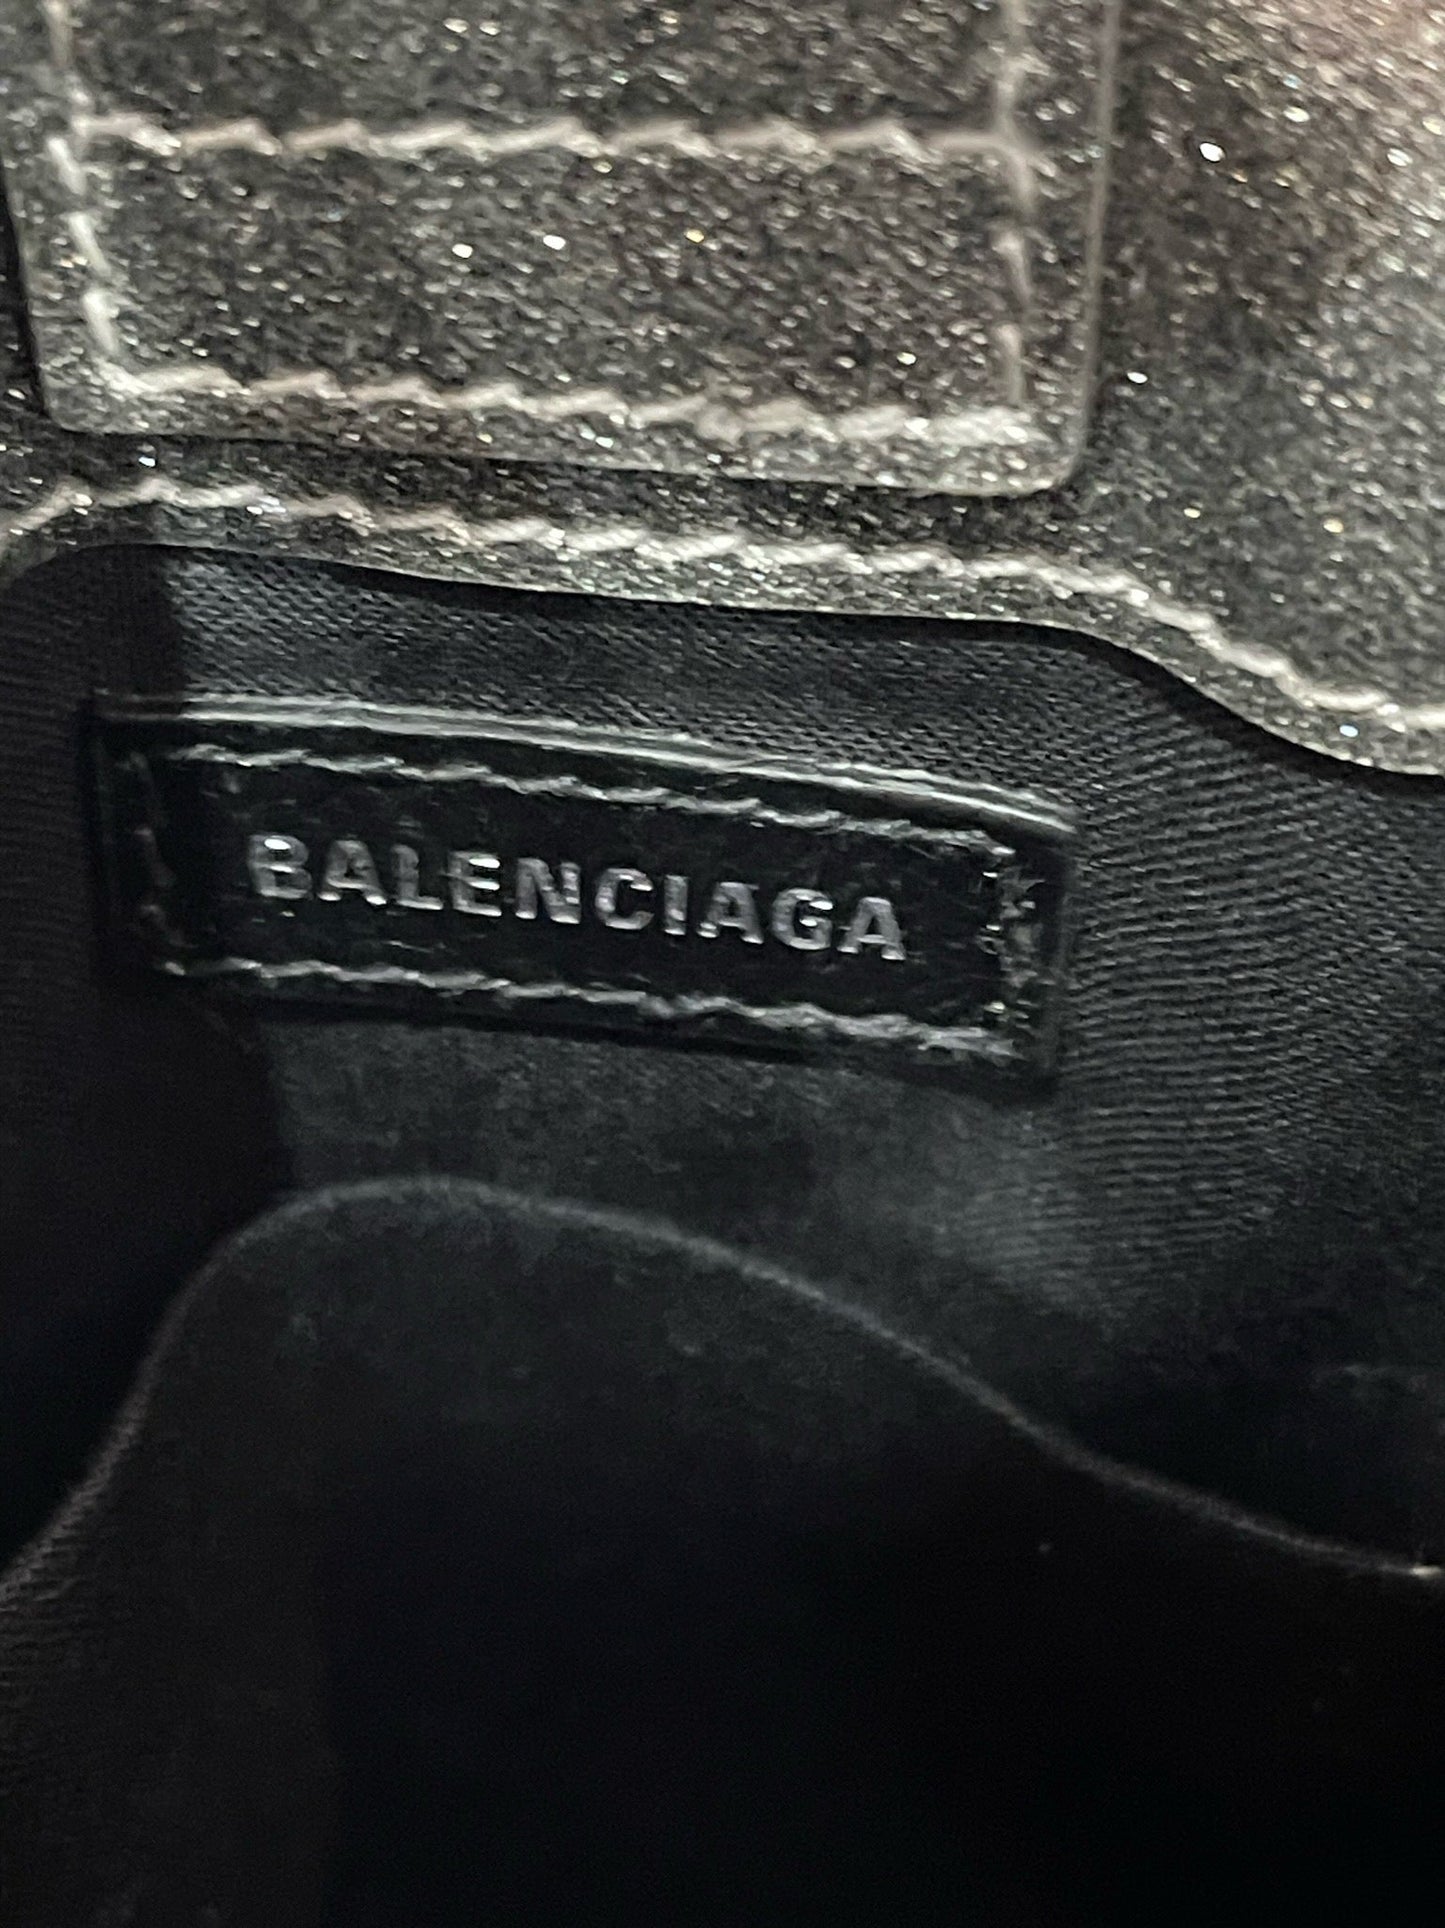 Sac Balenciaga Mini Shopping